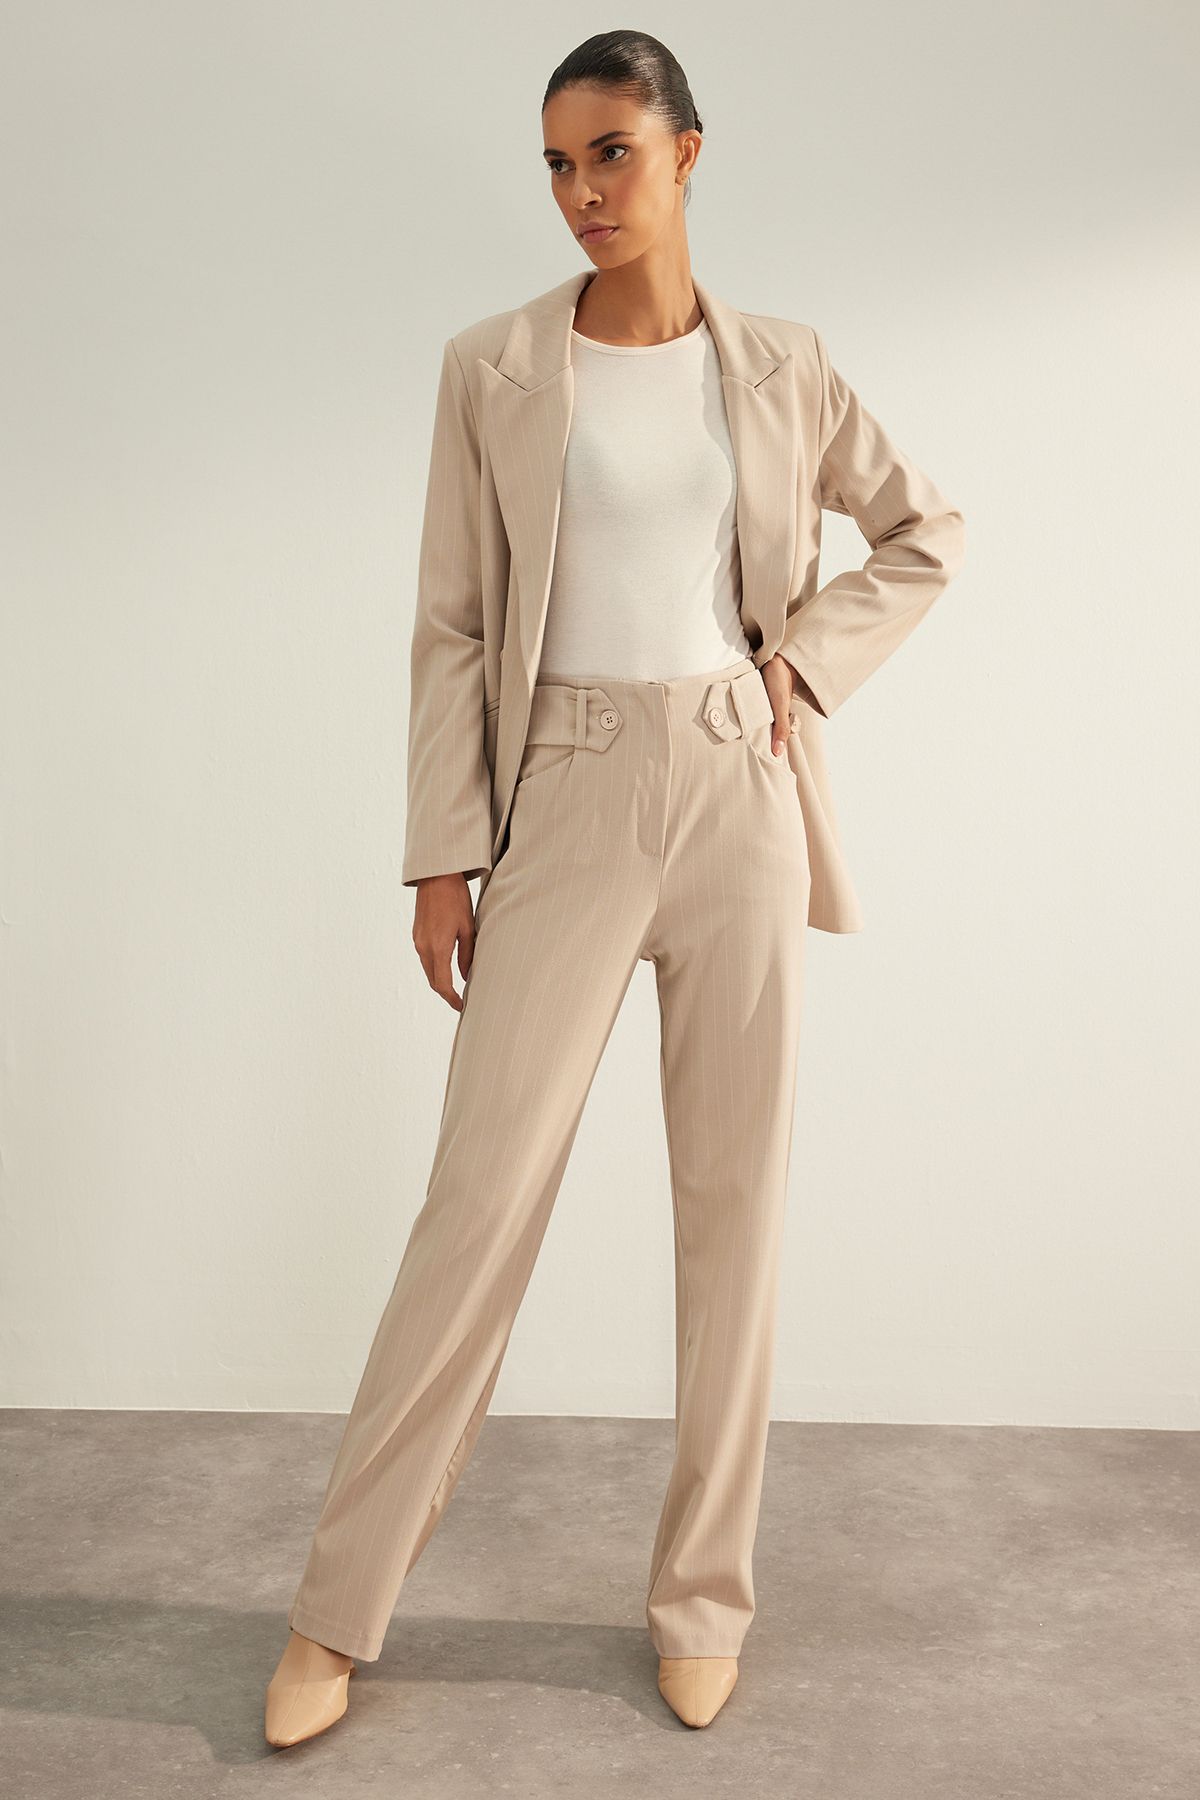 Zara Beige Pants Styles, Prices - Trendyol